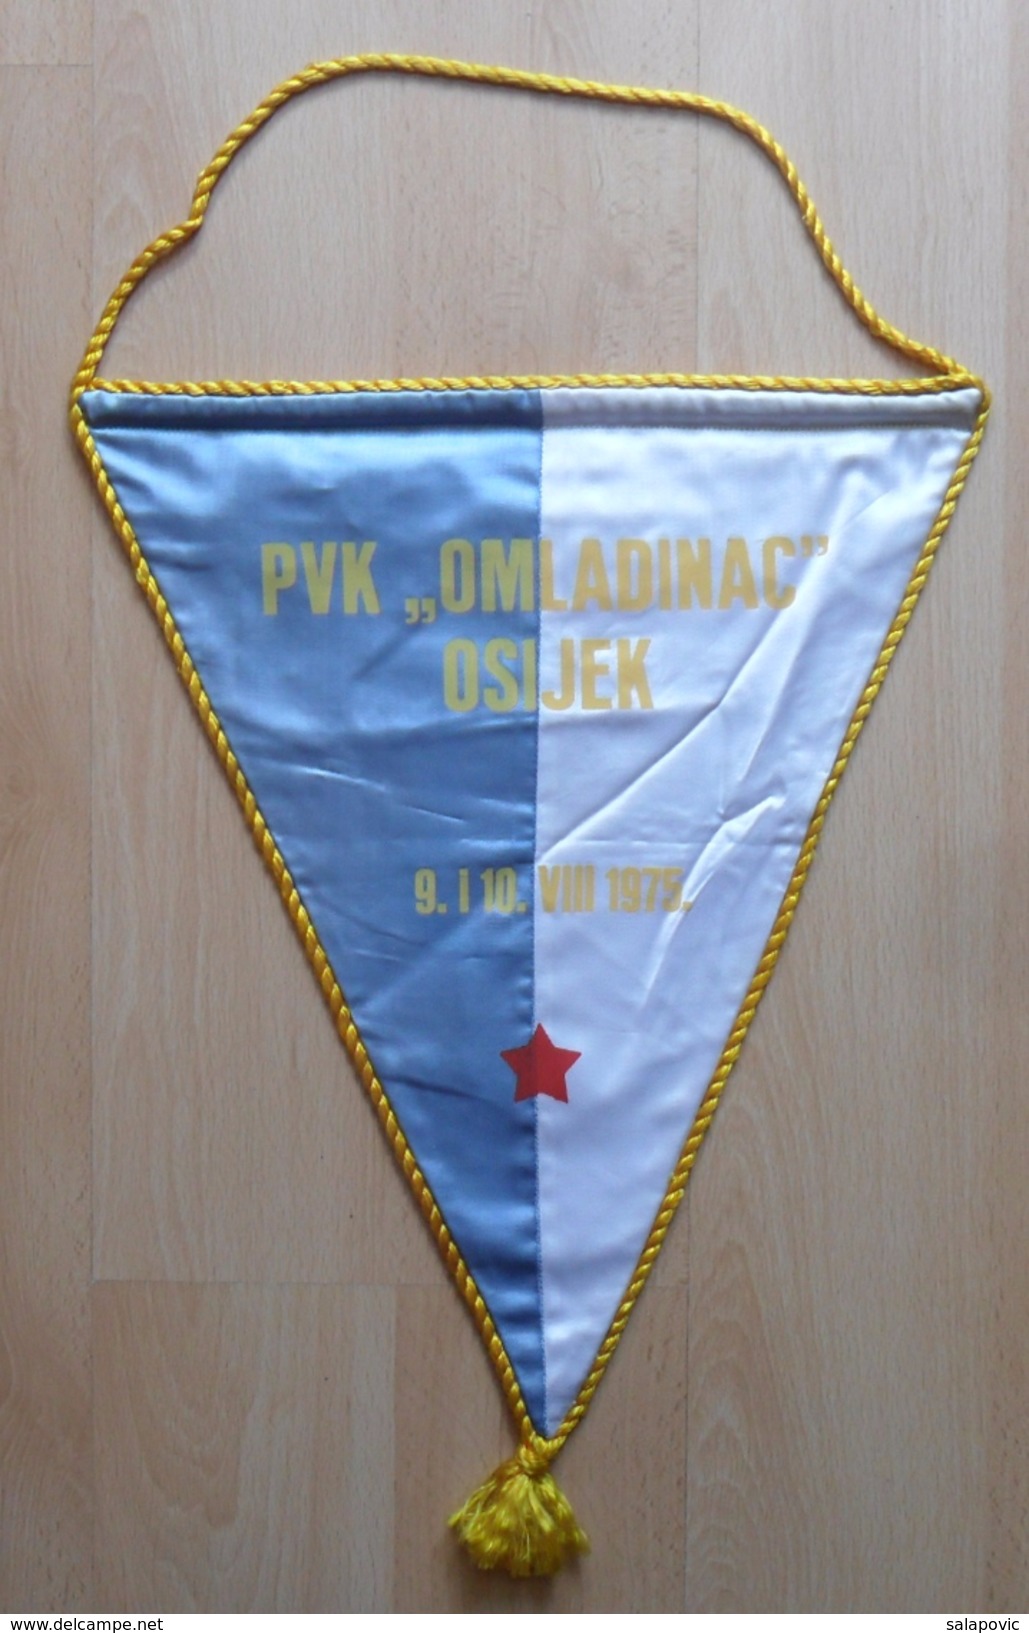 PVK OMLADINAC OSIJEK Croatia  WATER POLO CLUB,  OLD PENNANT, SPORTS FLAG - Swimming